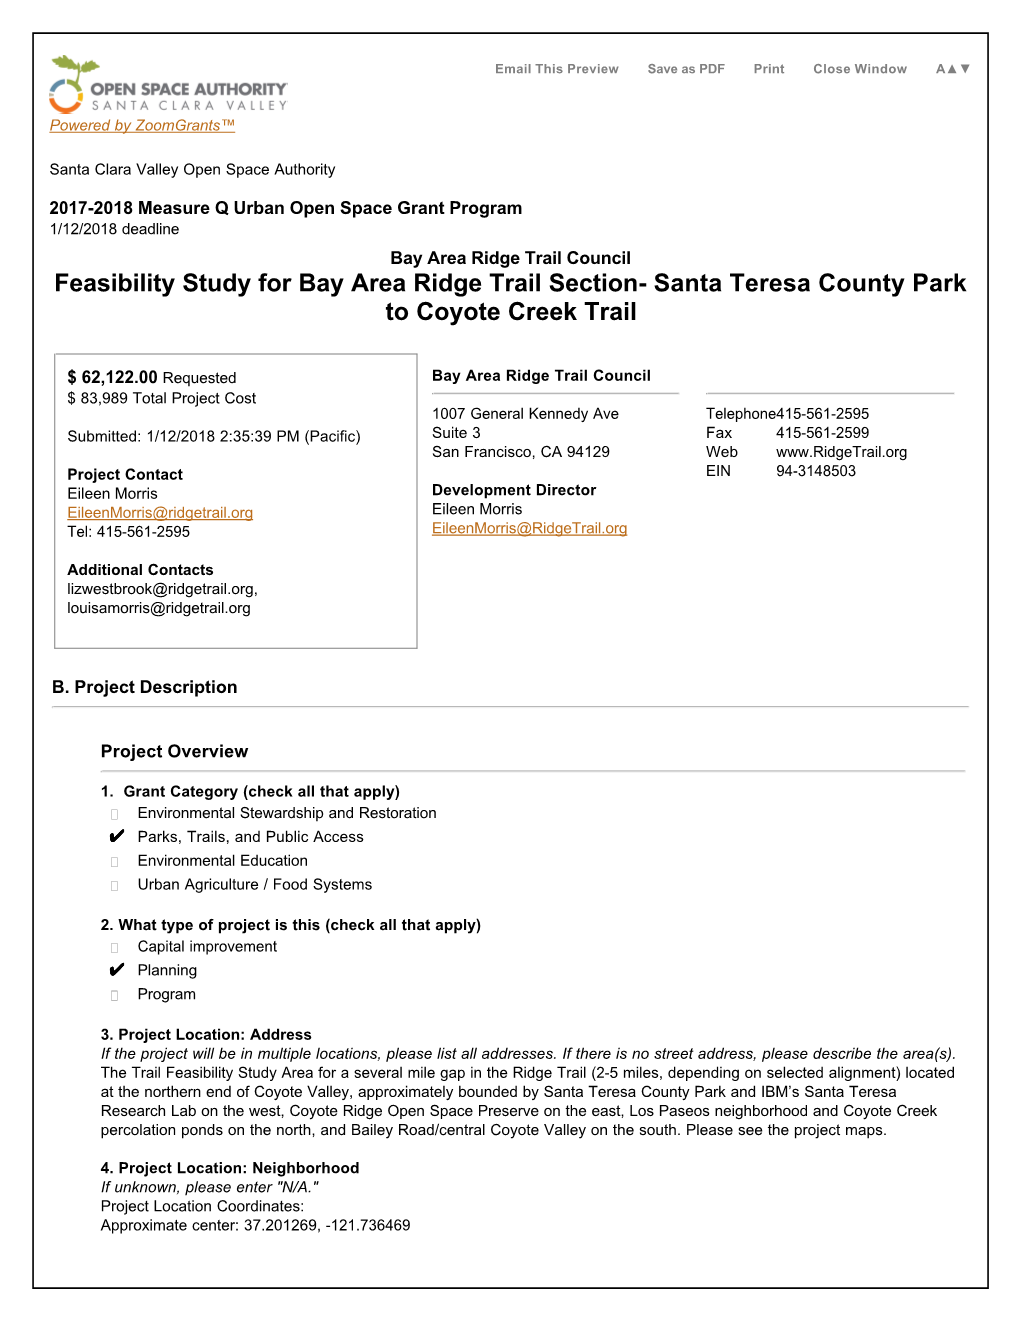 Feasibility Study for Bay Area Ridge Trail Section- Santa Teresa County Park to Coyote Creek Trail